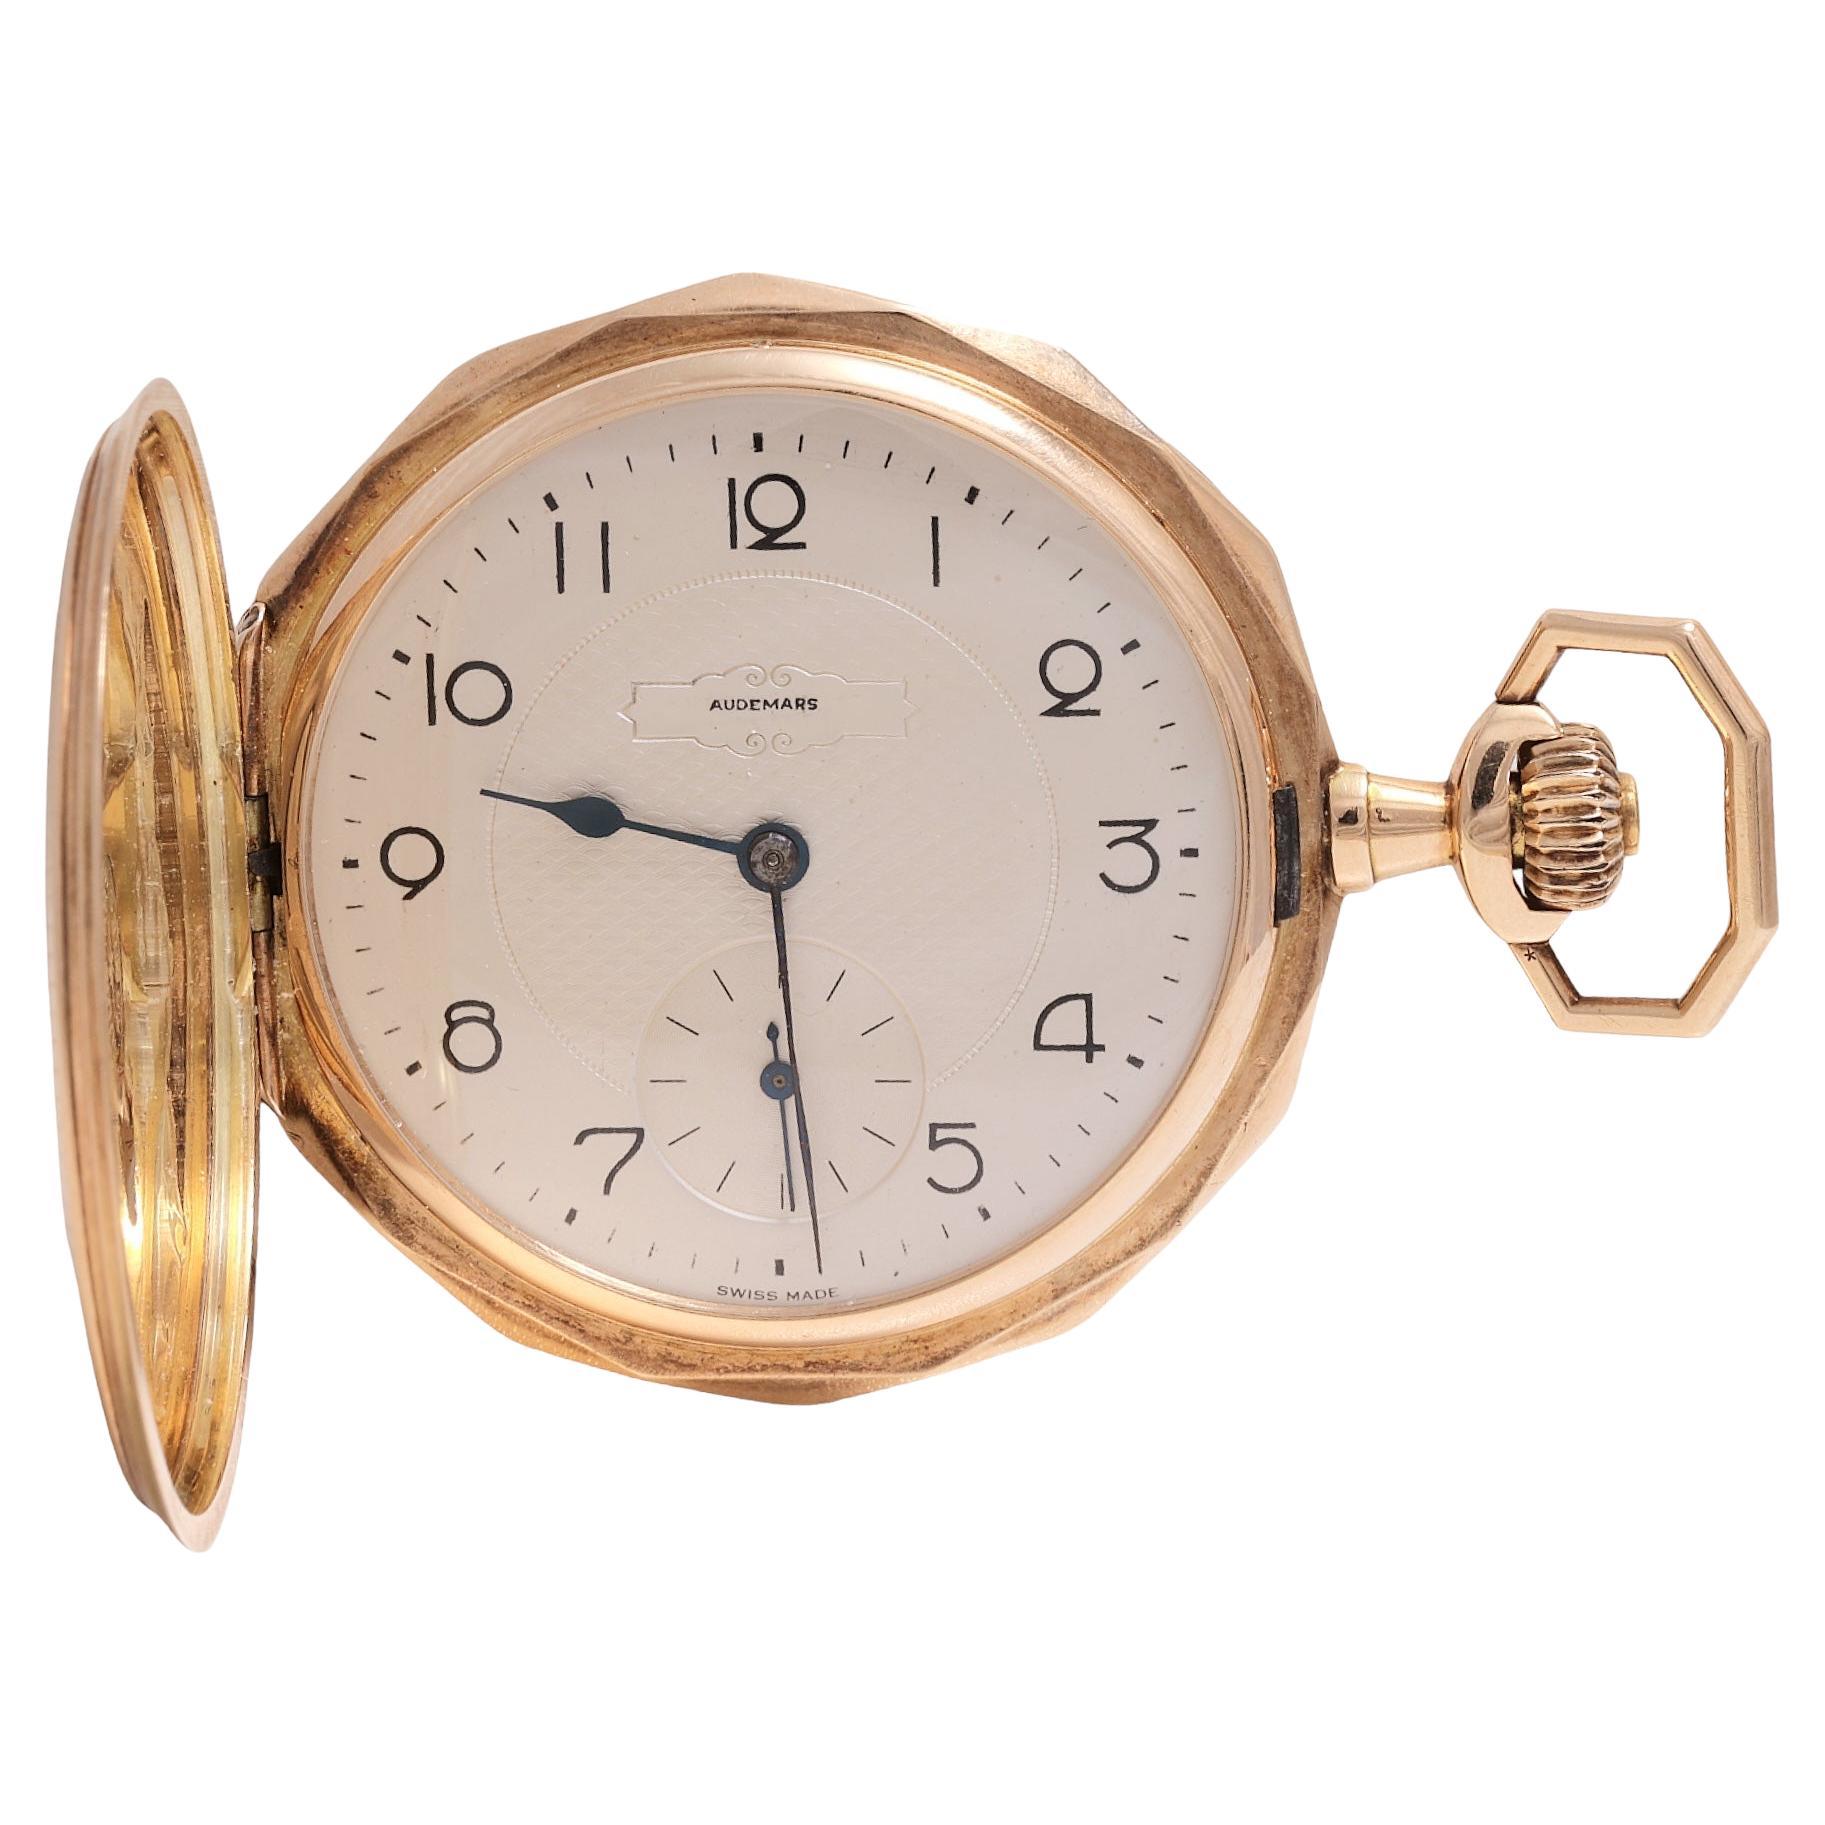 14 Kt Gold Audemars Frères Genève Pocket Watch, before Audemars Piguet founded